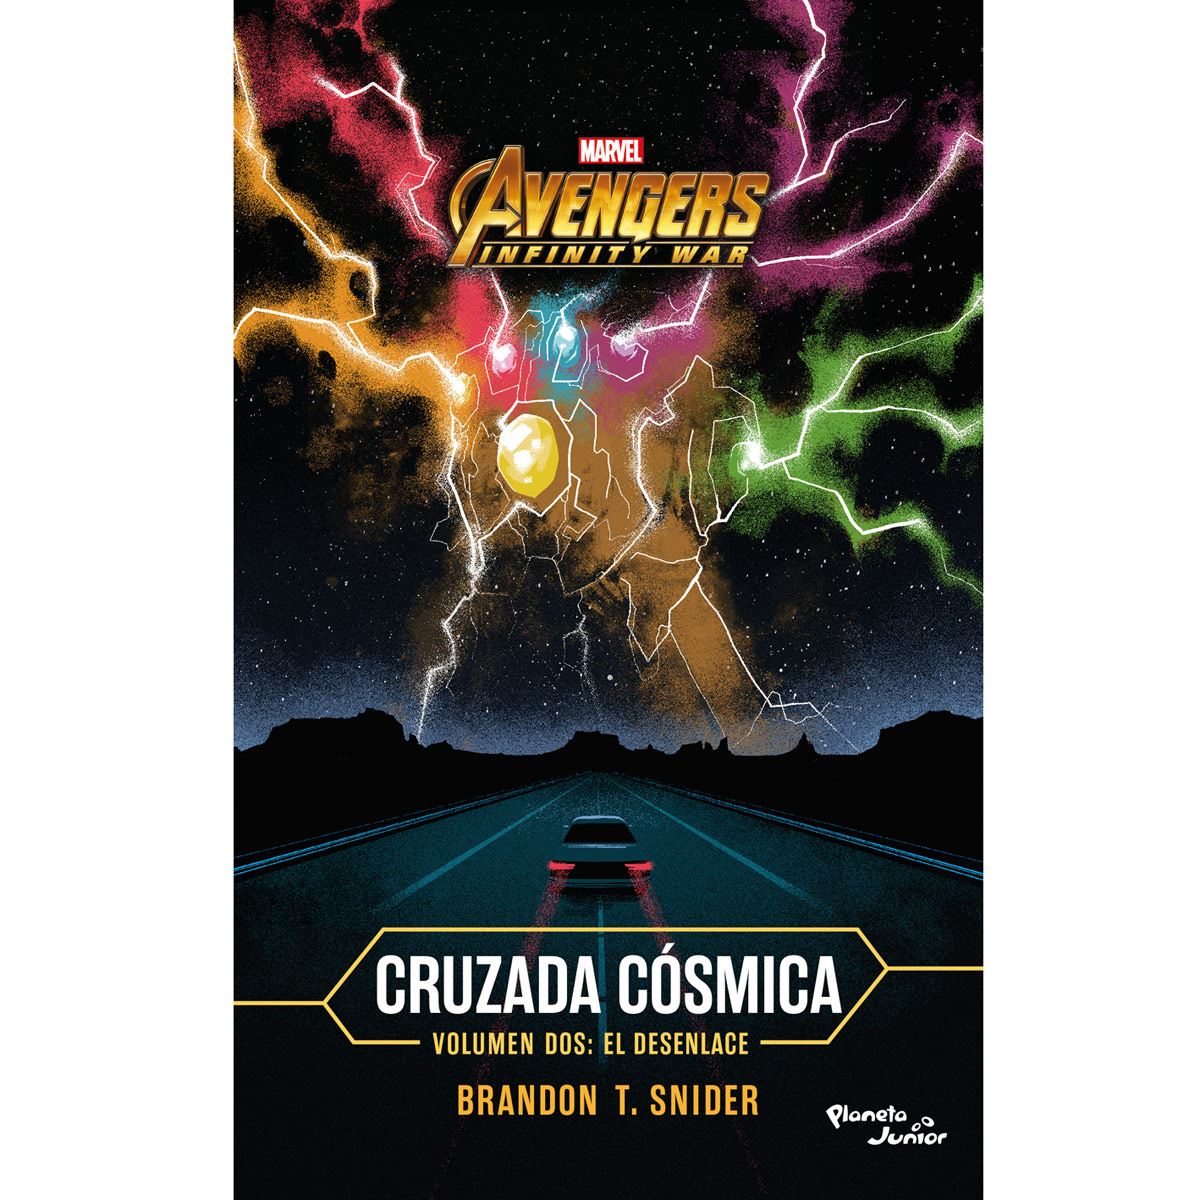 Avengers. Infinity war. Cruzada cósmica Vol. 2